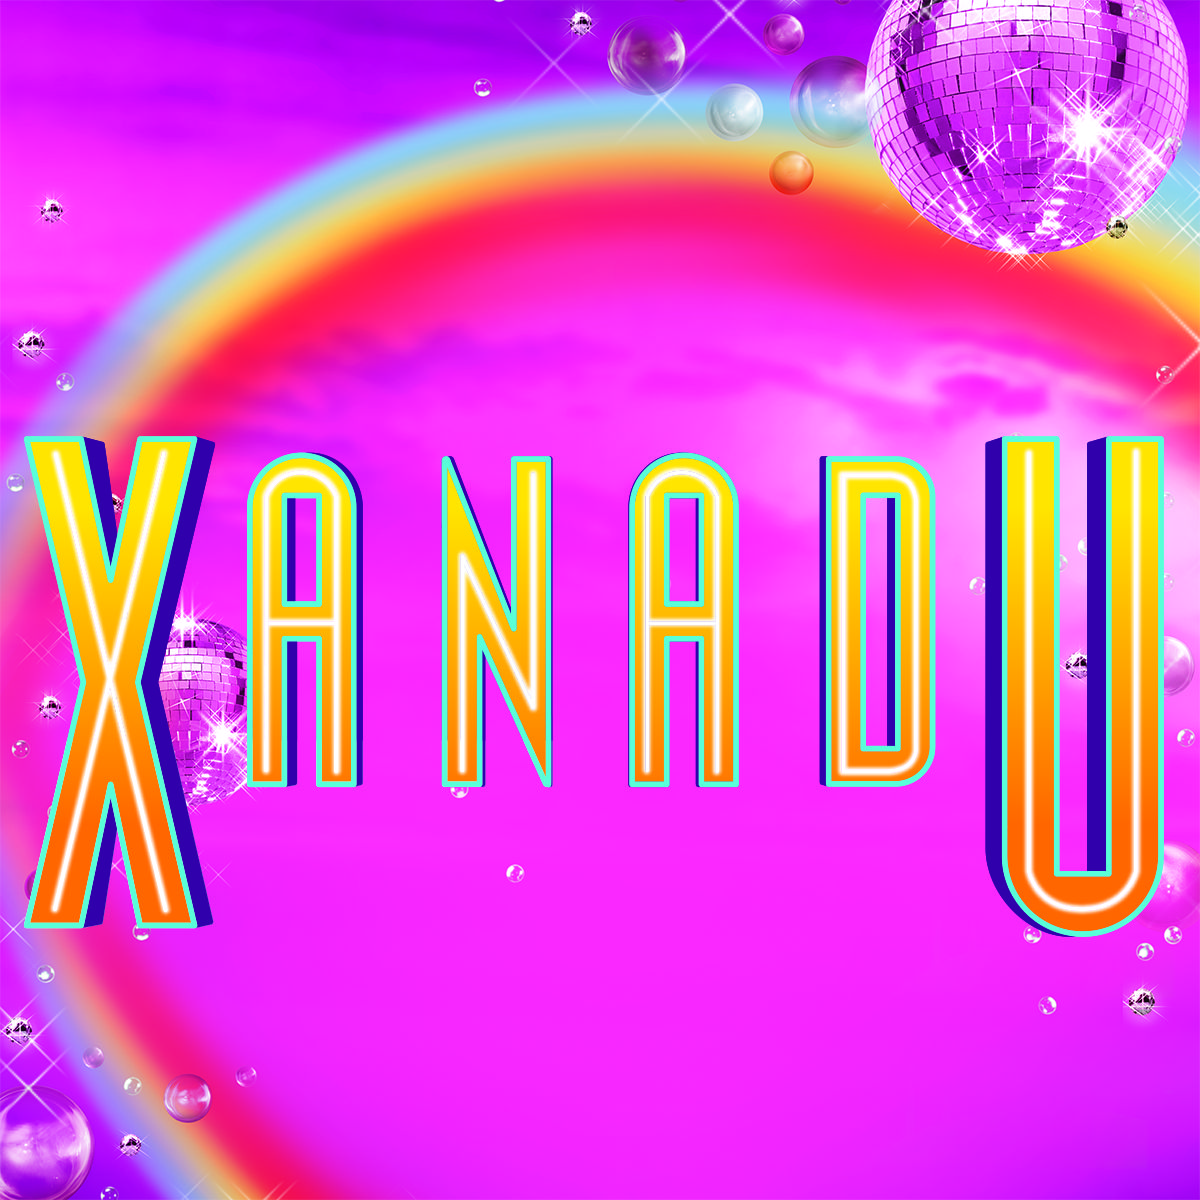 XANADU assembled logo on bkgrnd 4x4-1